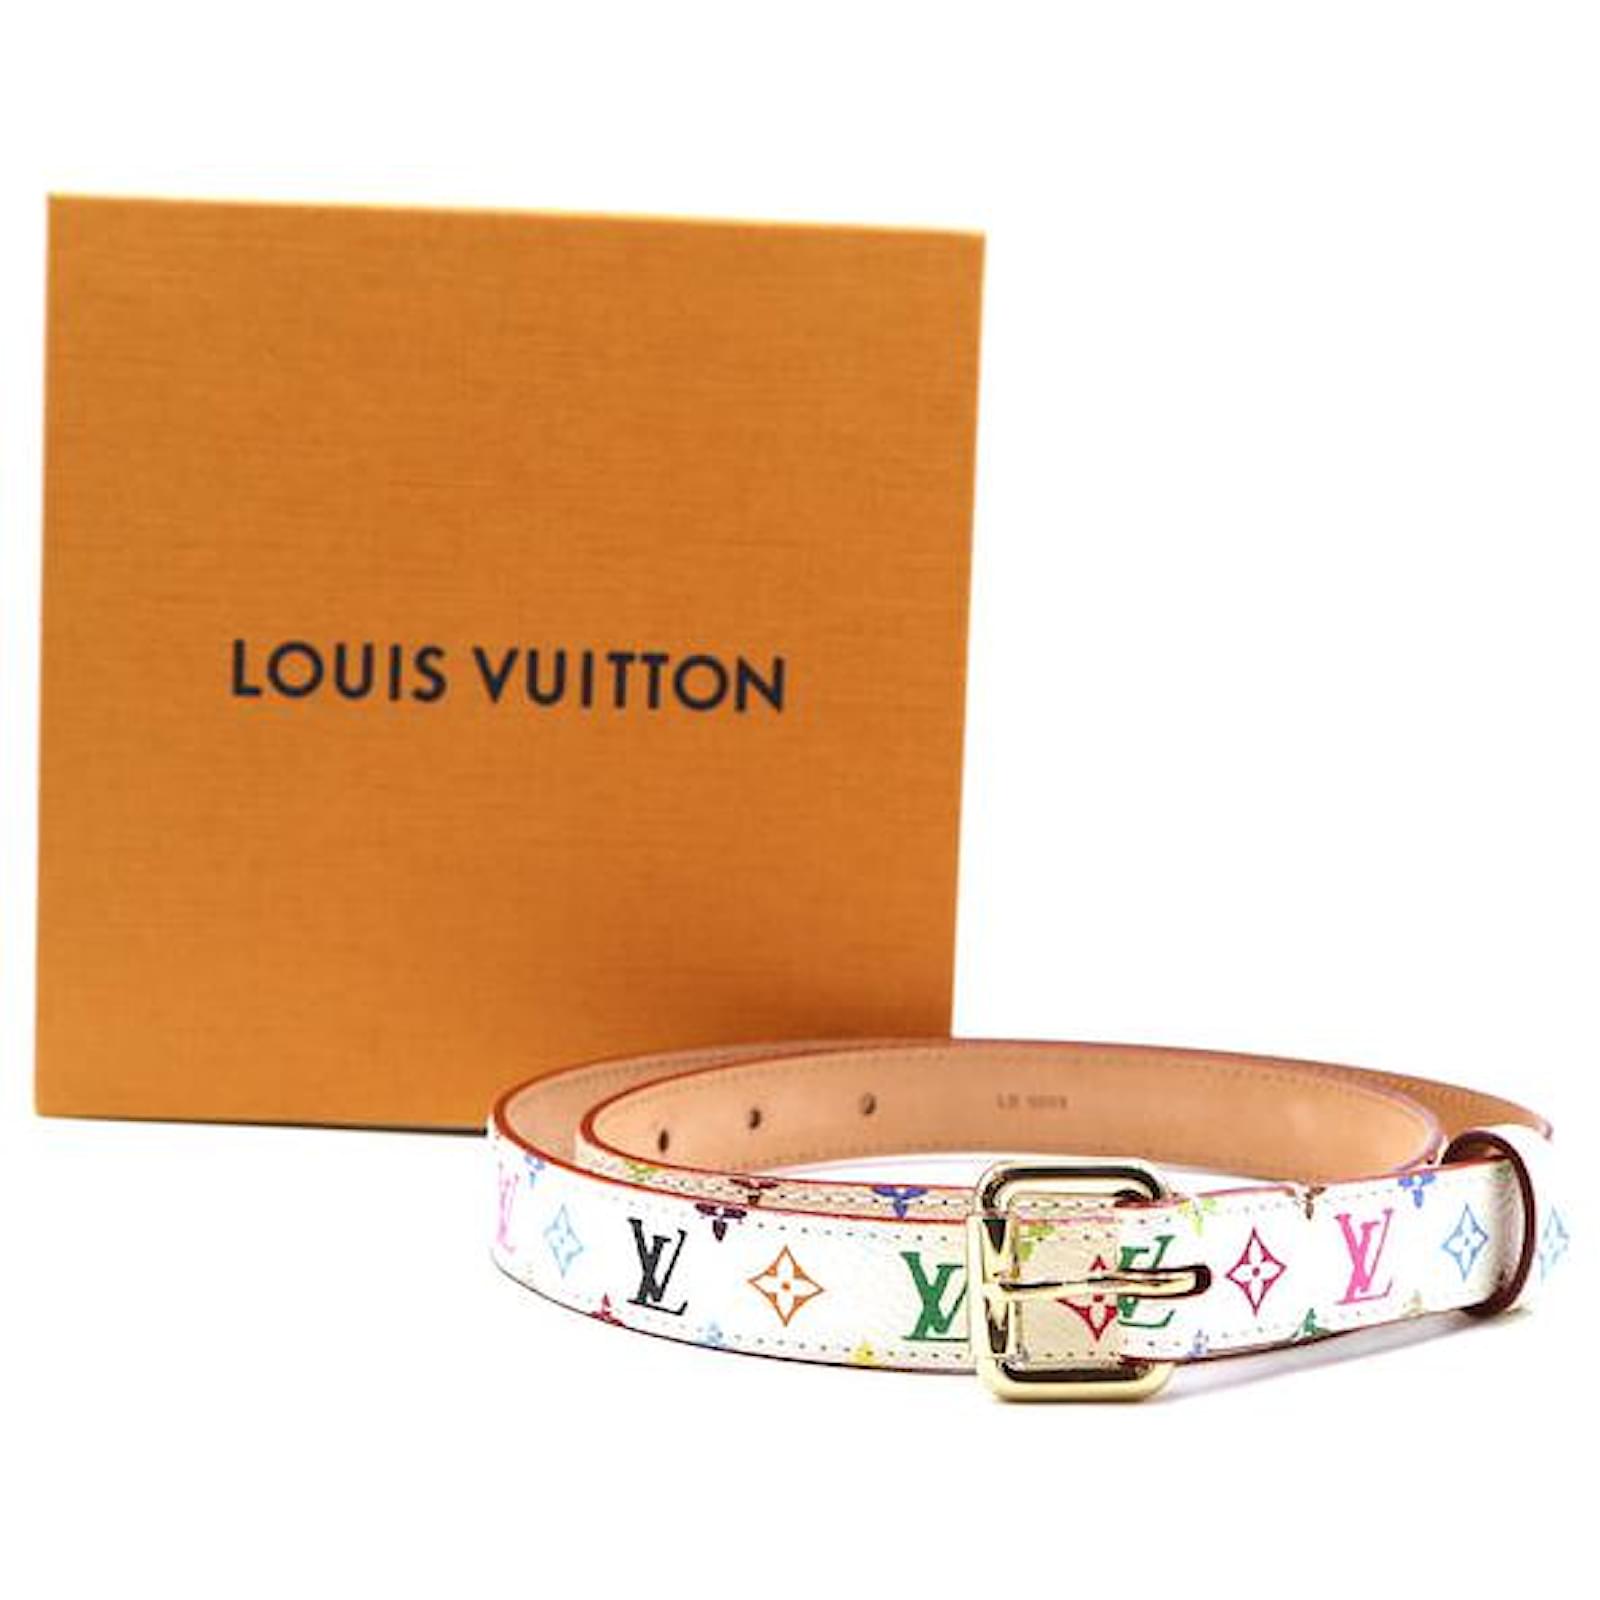 Louis Vuitton Monogram Belt Size 80/32